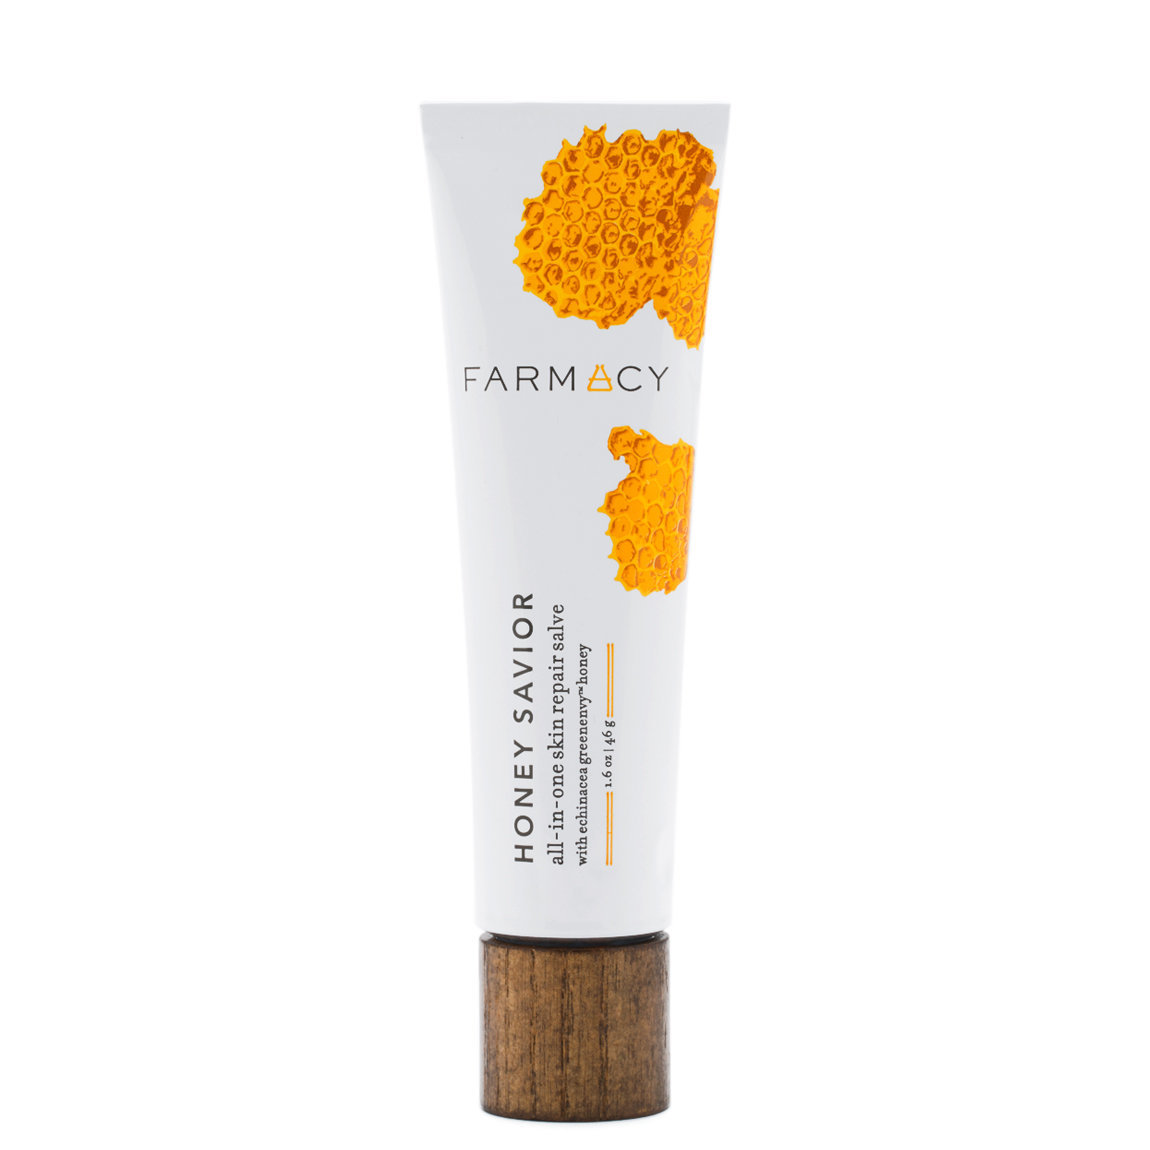 Farmacy Honey Savior All-In-One Skin Repair Salve 1.6 oz alternative view 1 - product swatch.